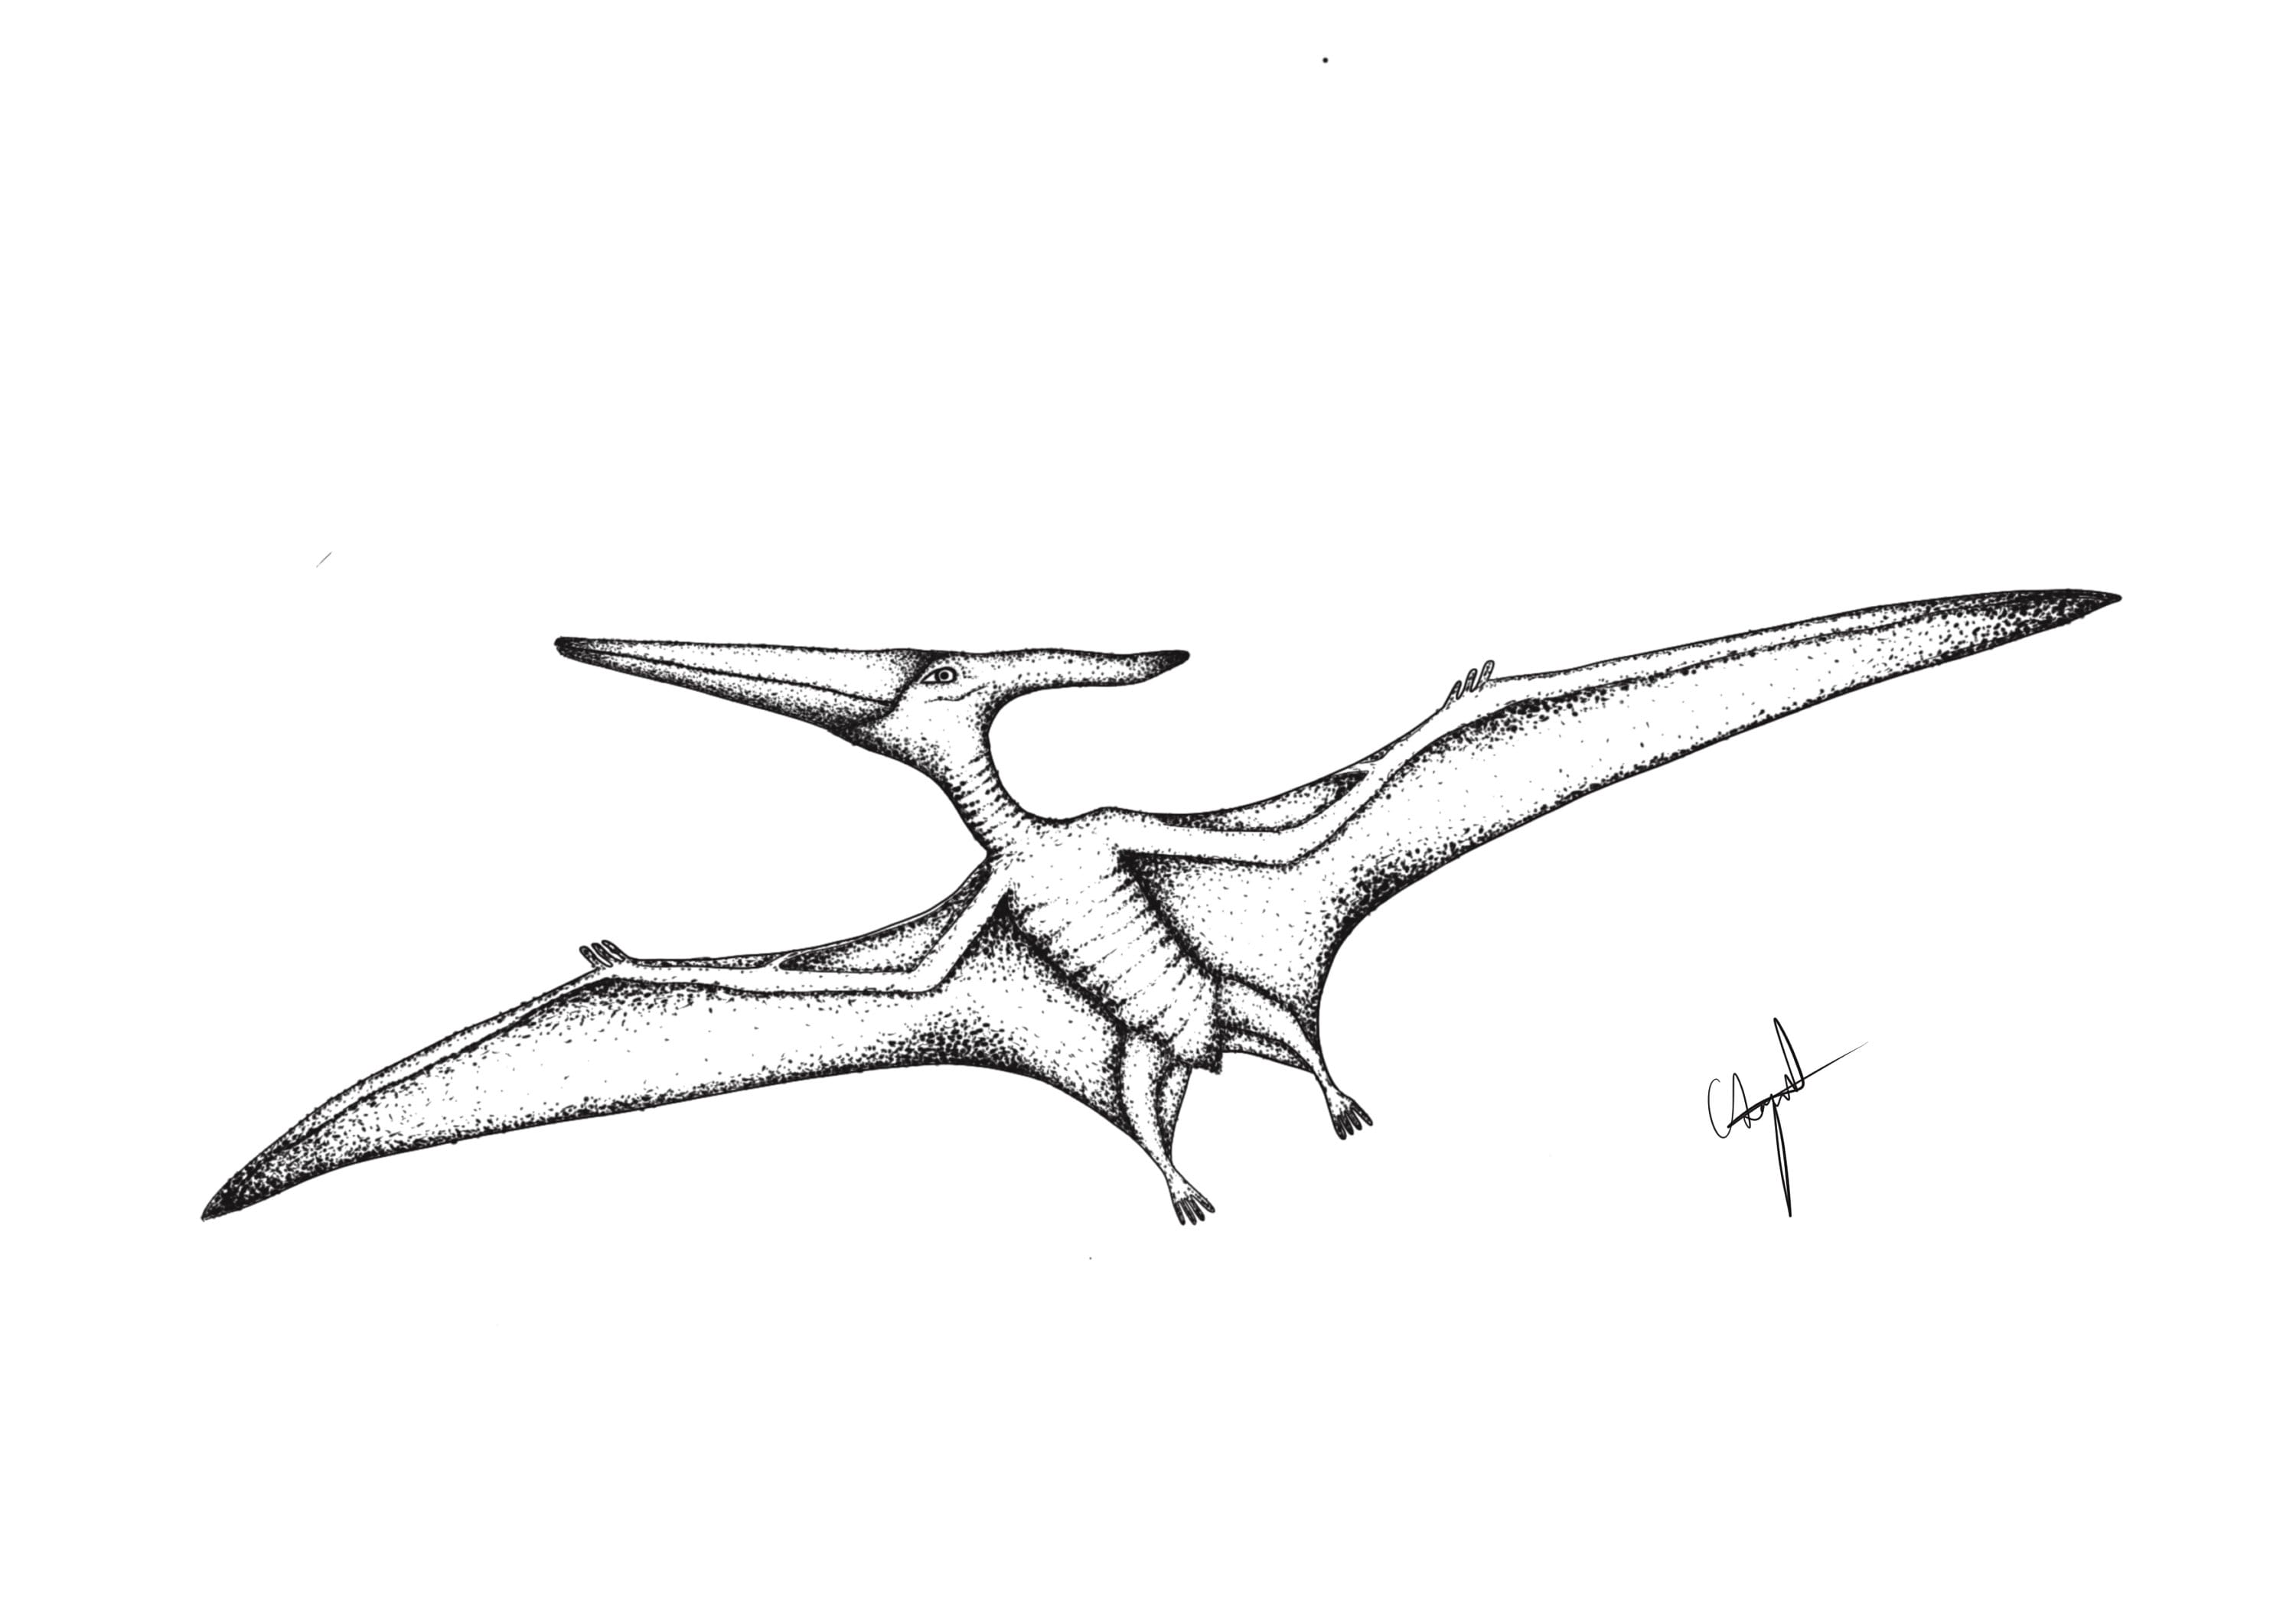 240 Pterodactyl Flying Drawing Illustrations RoyaltyFree Vector Graphics   Clip Art  iStock